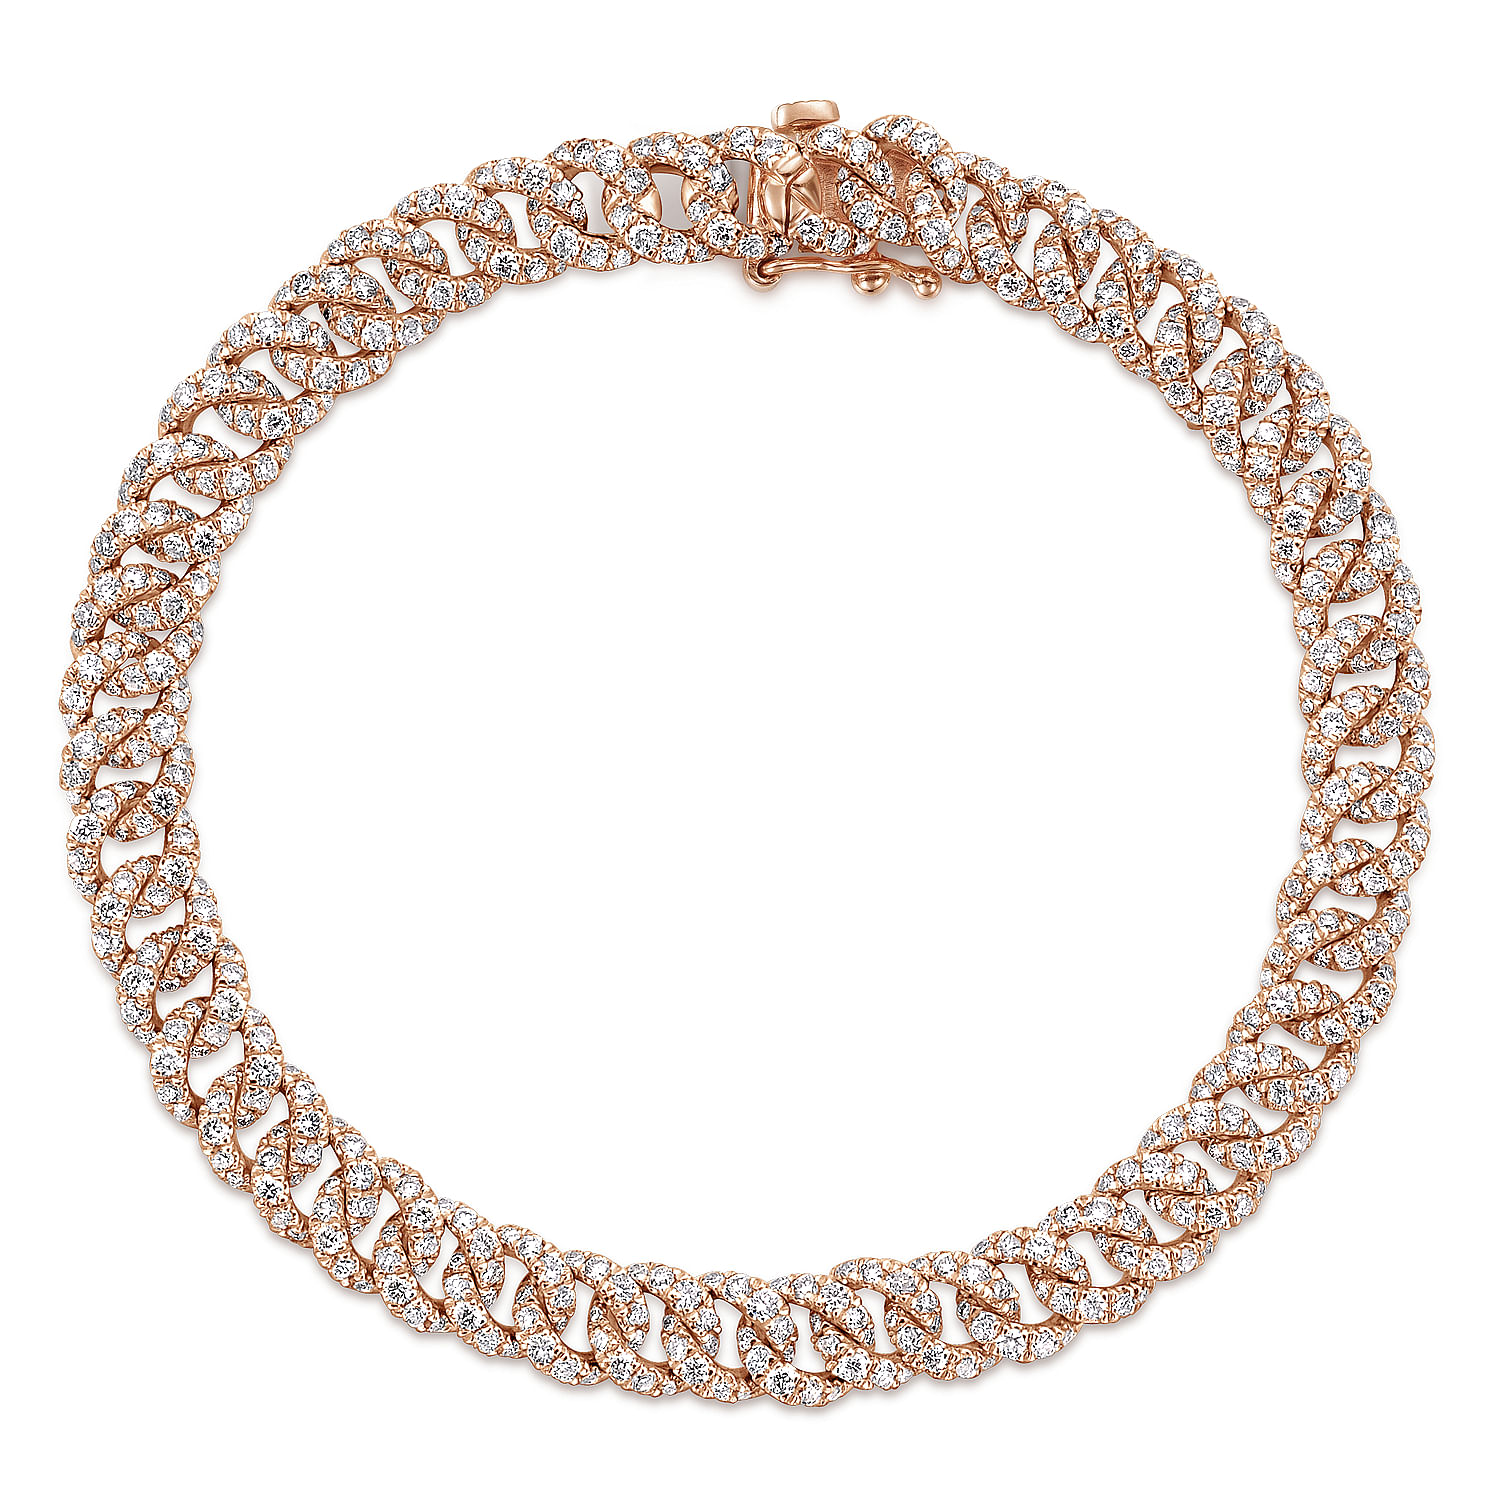 14K Rose Gold Diamond Link Tennis Bracelet